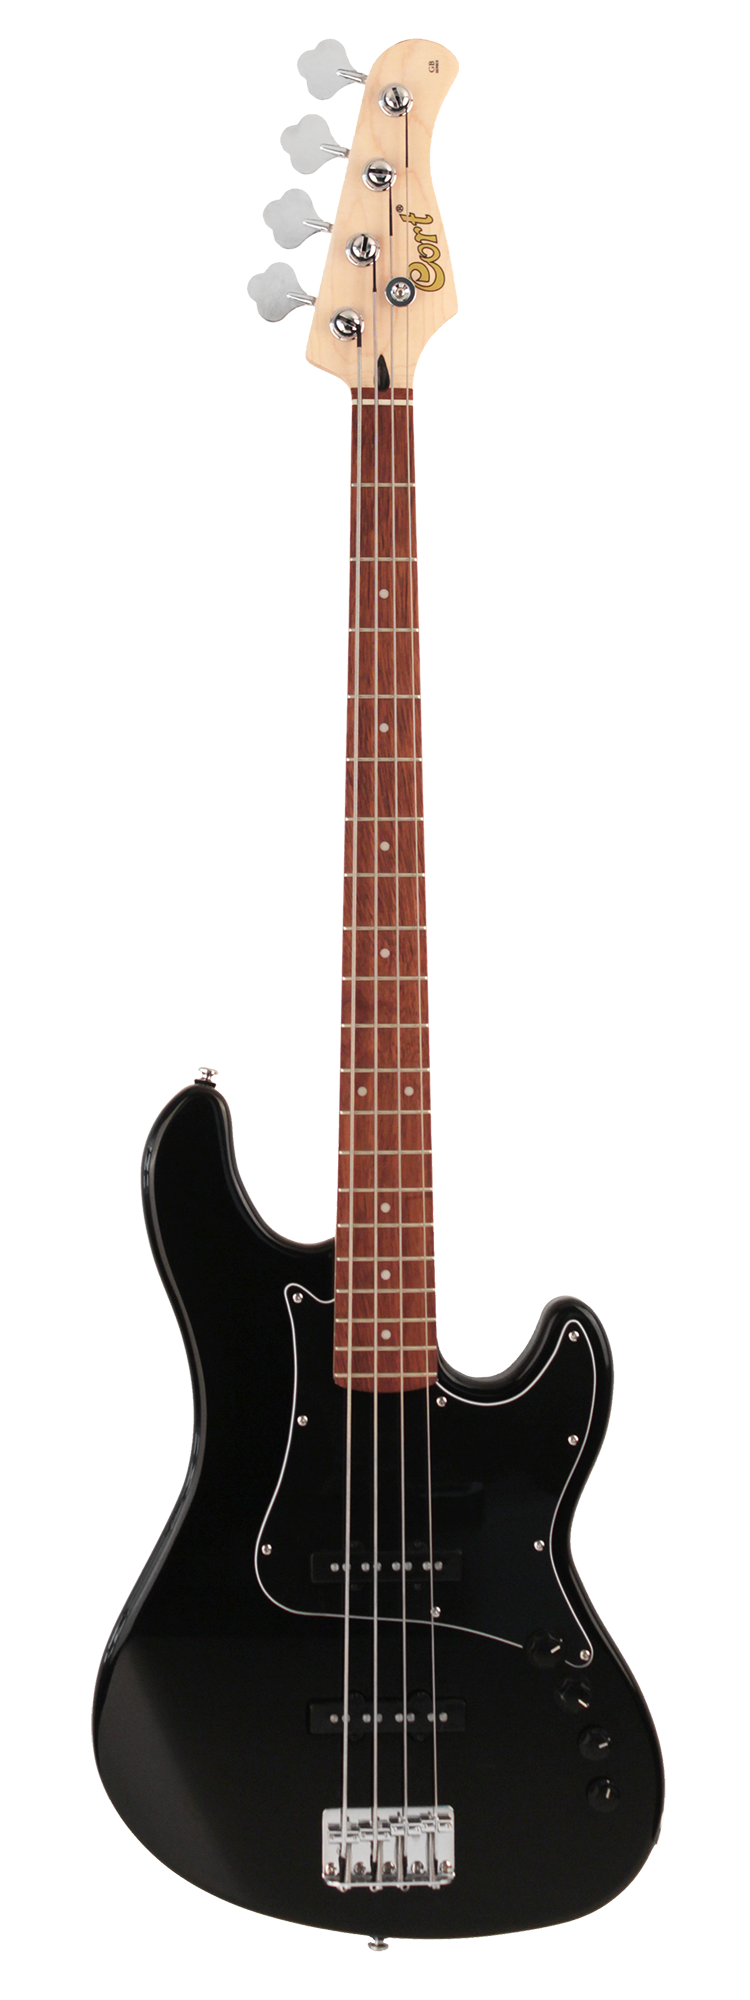 GB34JJ-WBAG-3TS GB Series Бас-гитара, санберст, с чехлом, Cort купить в prostore.me